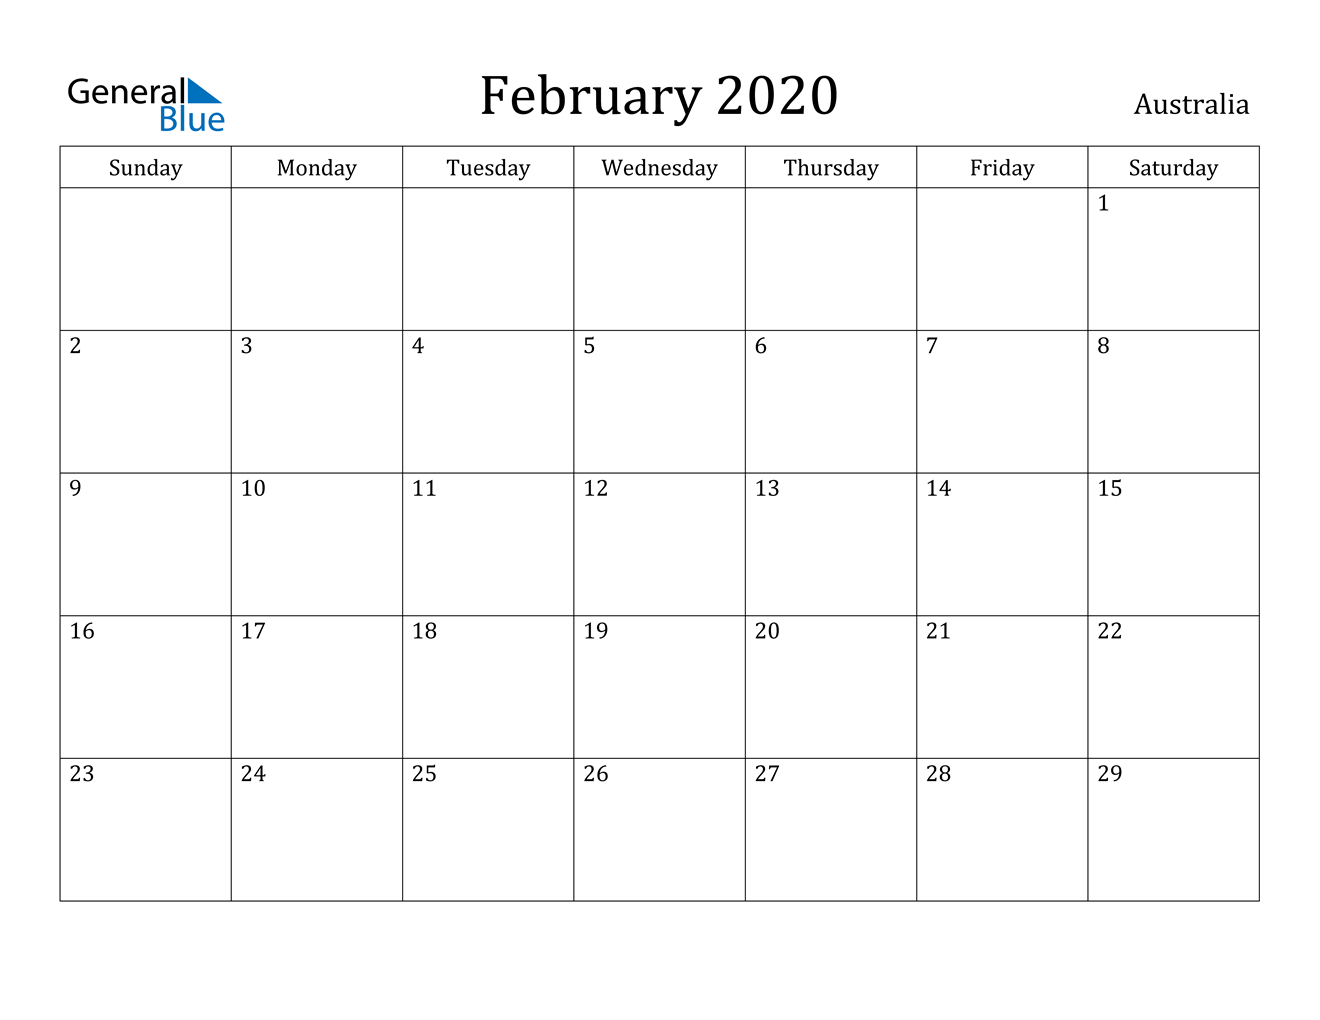 February 2020 Calendar - Australia